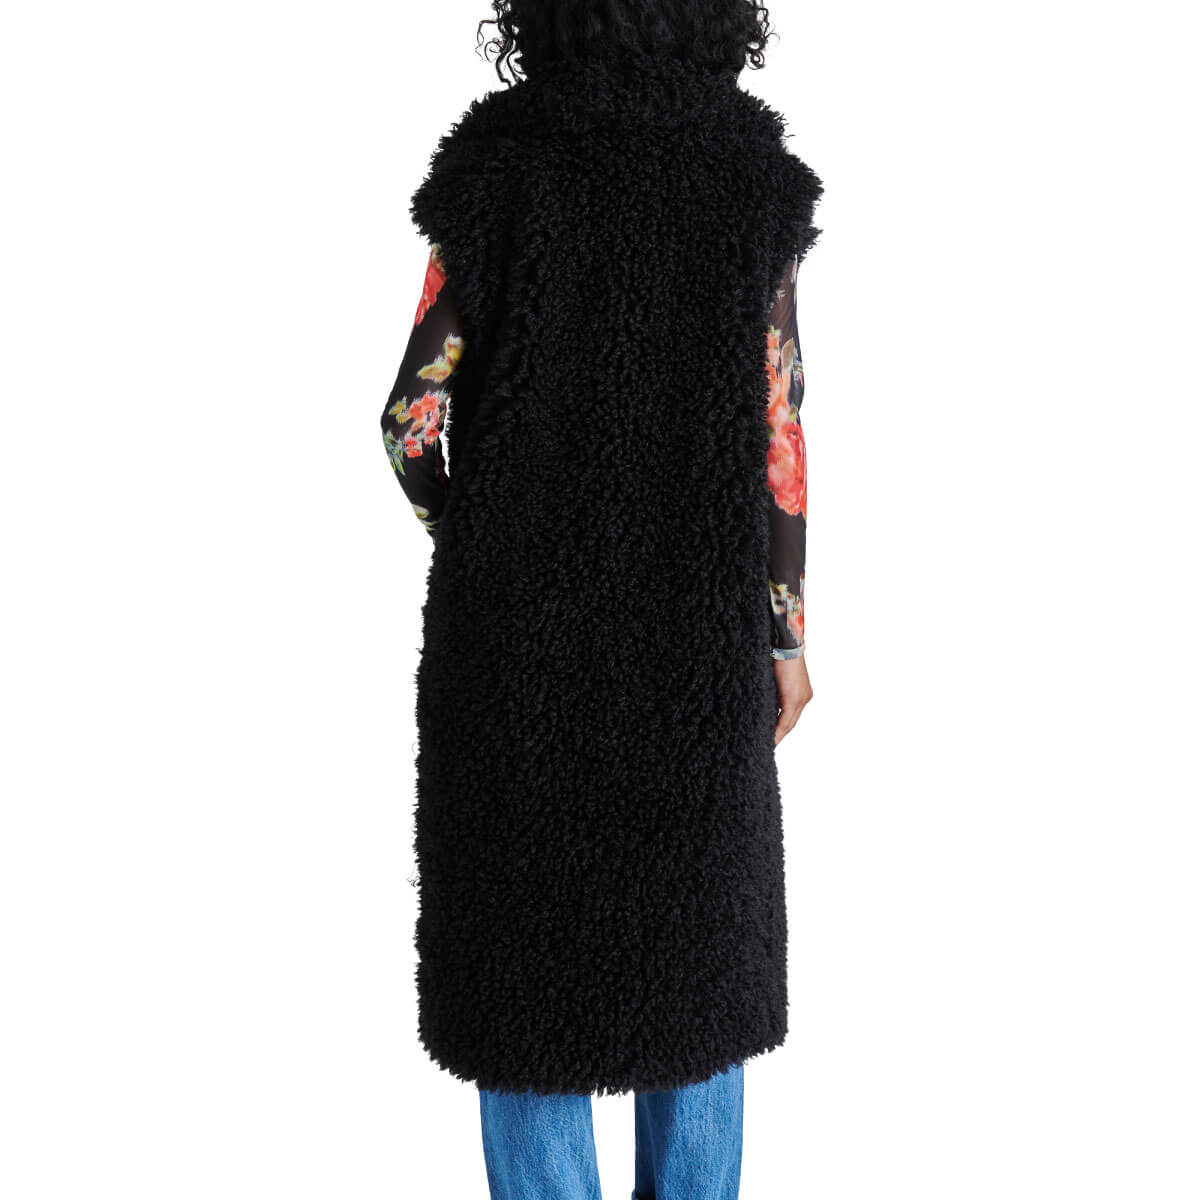 Steve Madden Giada Faux Fur Collar Vest black back| MILK MONEY milkmoney.co | cute jackets for women. cute coats. cool jackets for women. stylish jackets for women. trendy jackets for women. trendy womens coats.